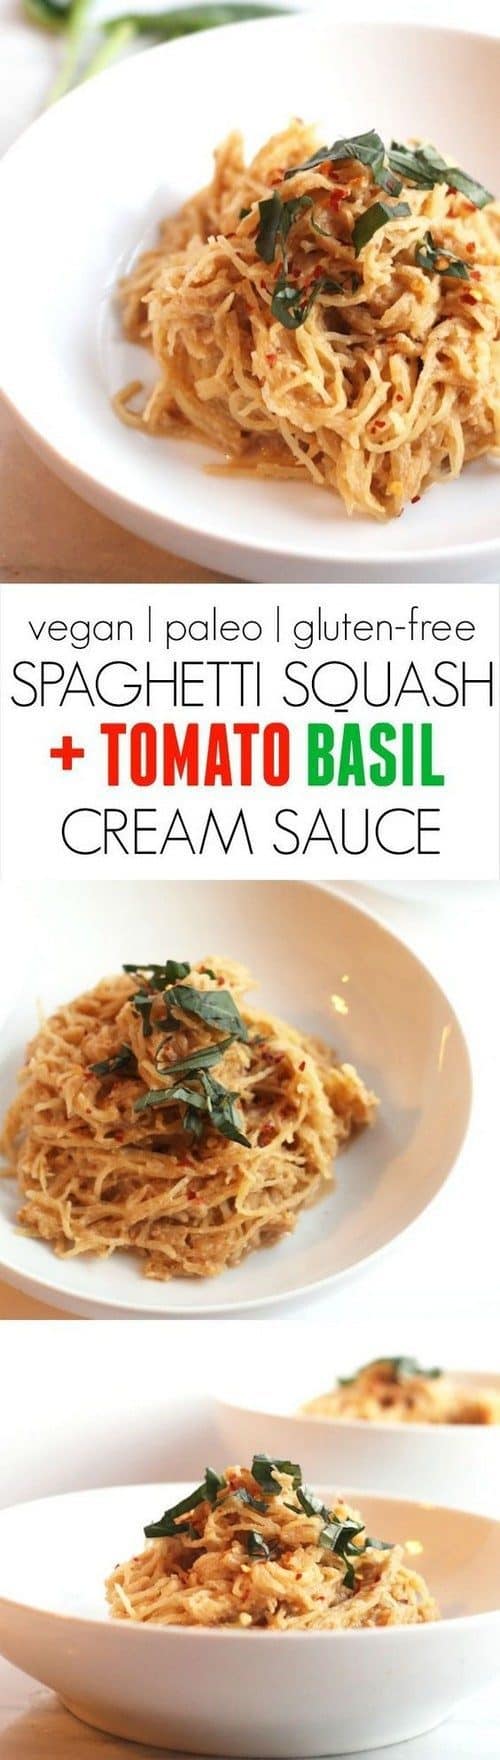 spaghetti-squash-vegan-tomato-basil-cream-sauce